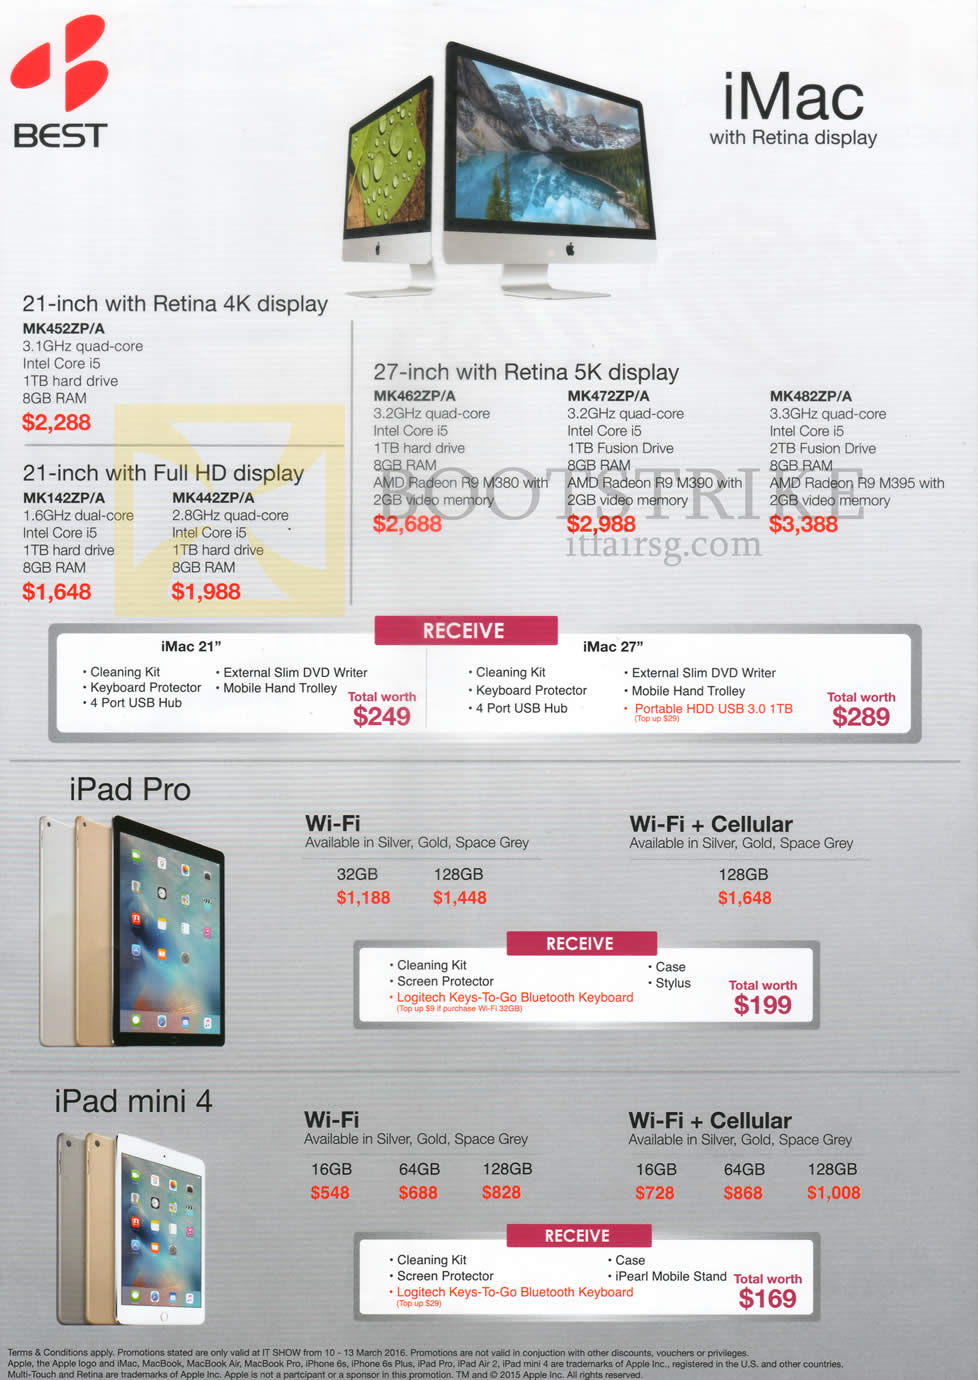 IT SHOW 2016 price list image brochure of Best Denki Apple IMac With Retina Display Desktop PC, IPad Pro Tablets, IPad Mini 4